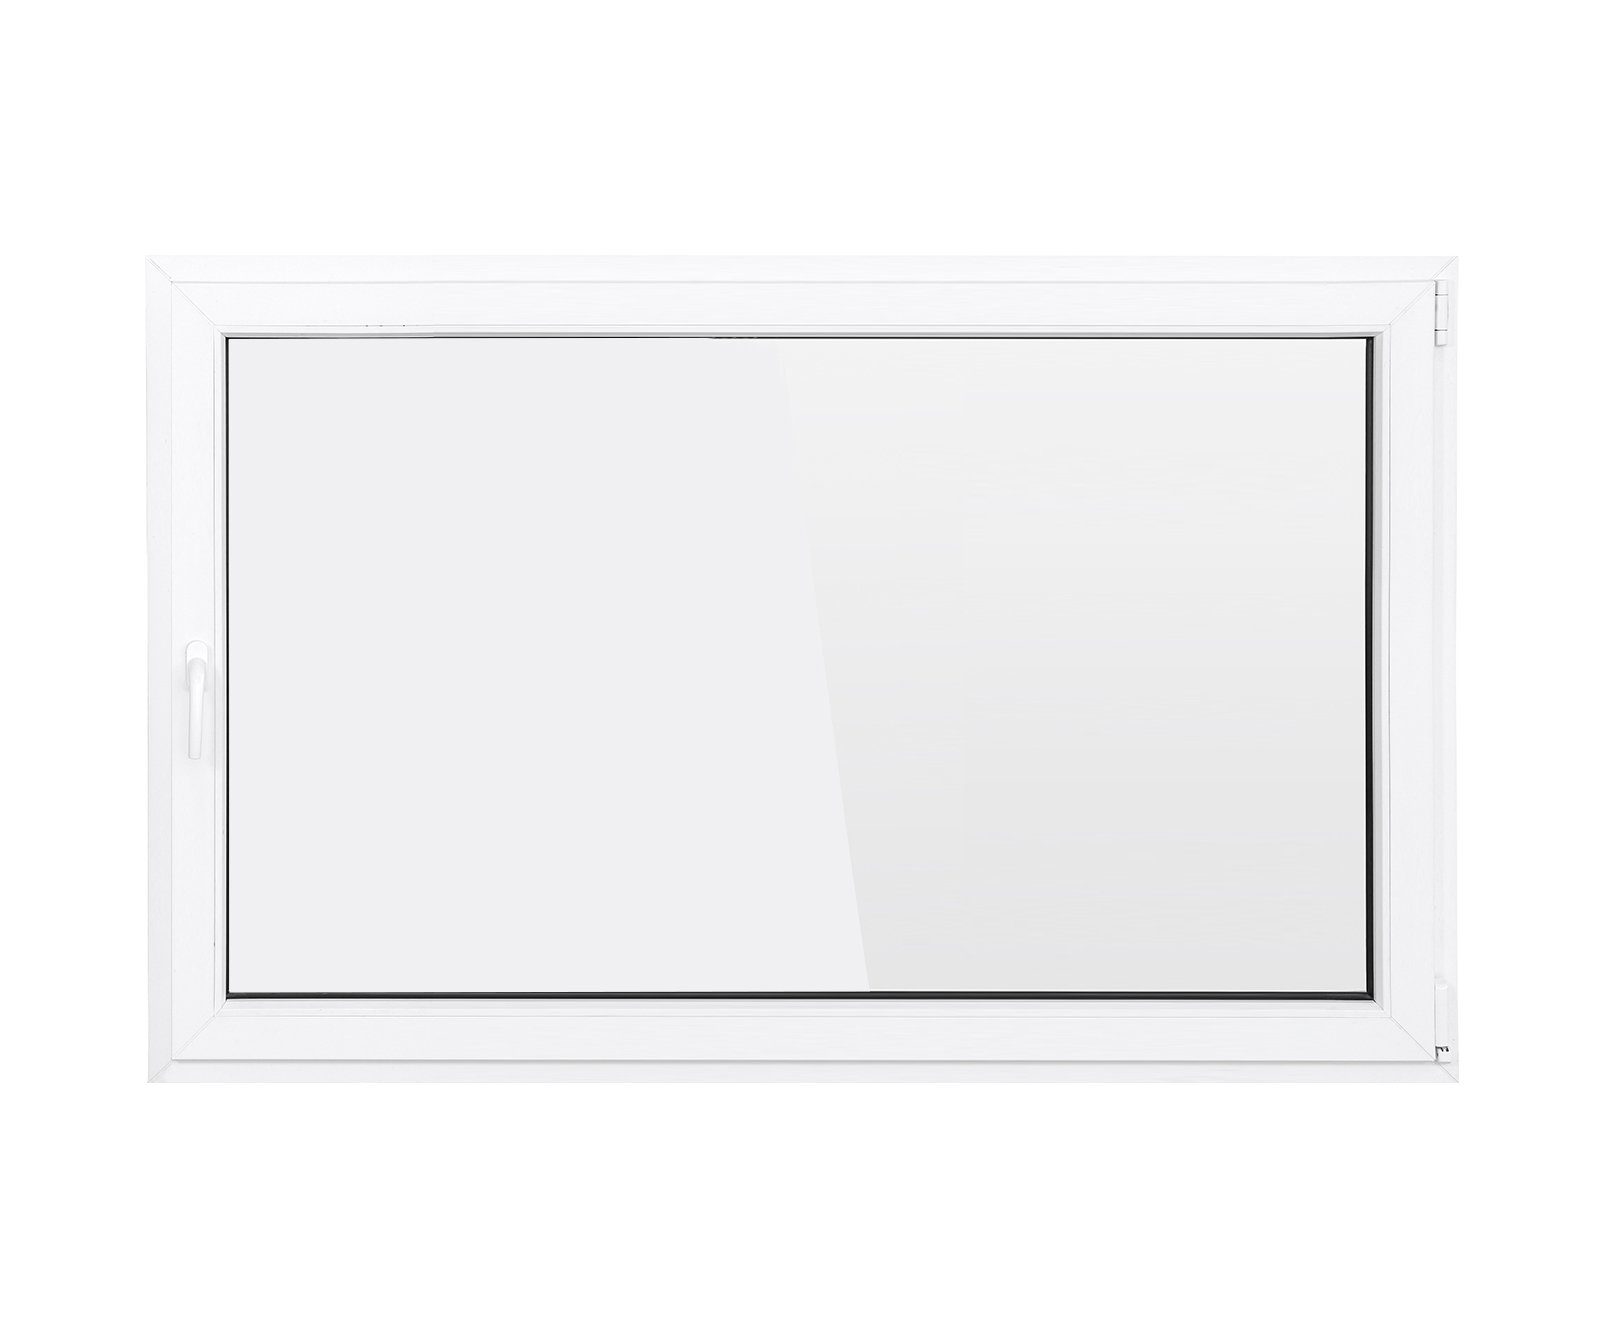 SN DECO GROUP Kellerfenster 1 Flügel 800x500 Dreh-Kipp 2-fach Verglasung weiß 70 mm Profil, (Set), RC2 Sicherheitsbeschlag, Hochwertiges 5-Kammer-Profil